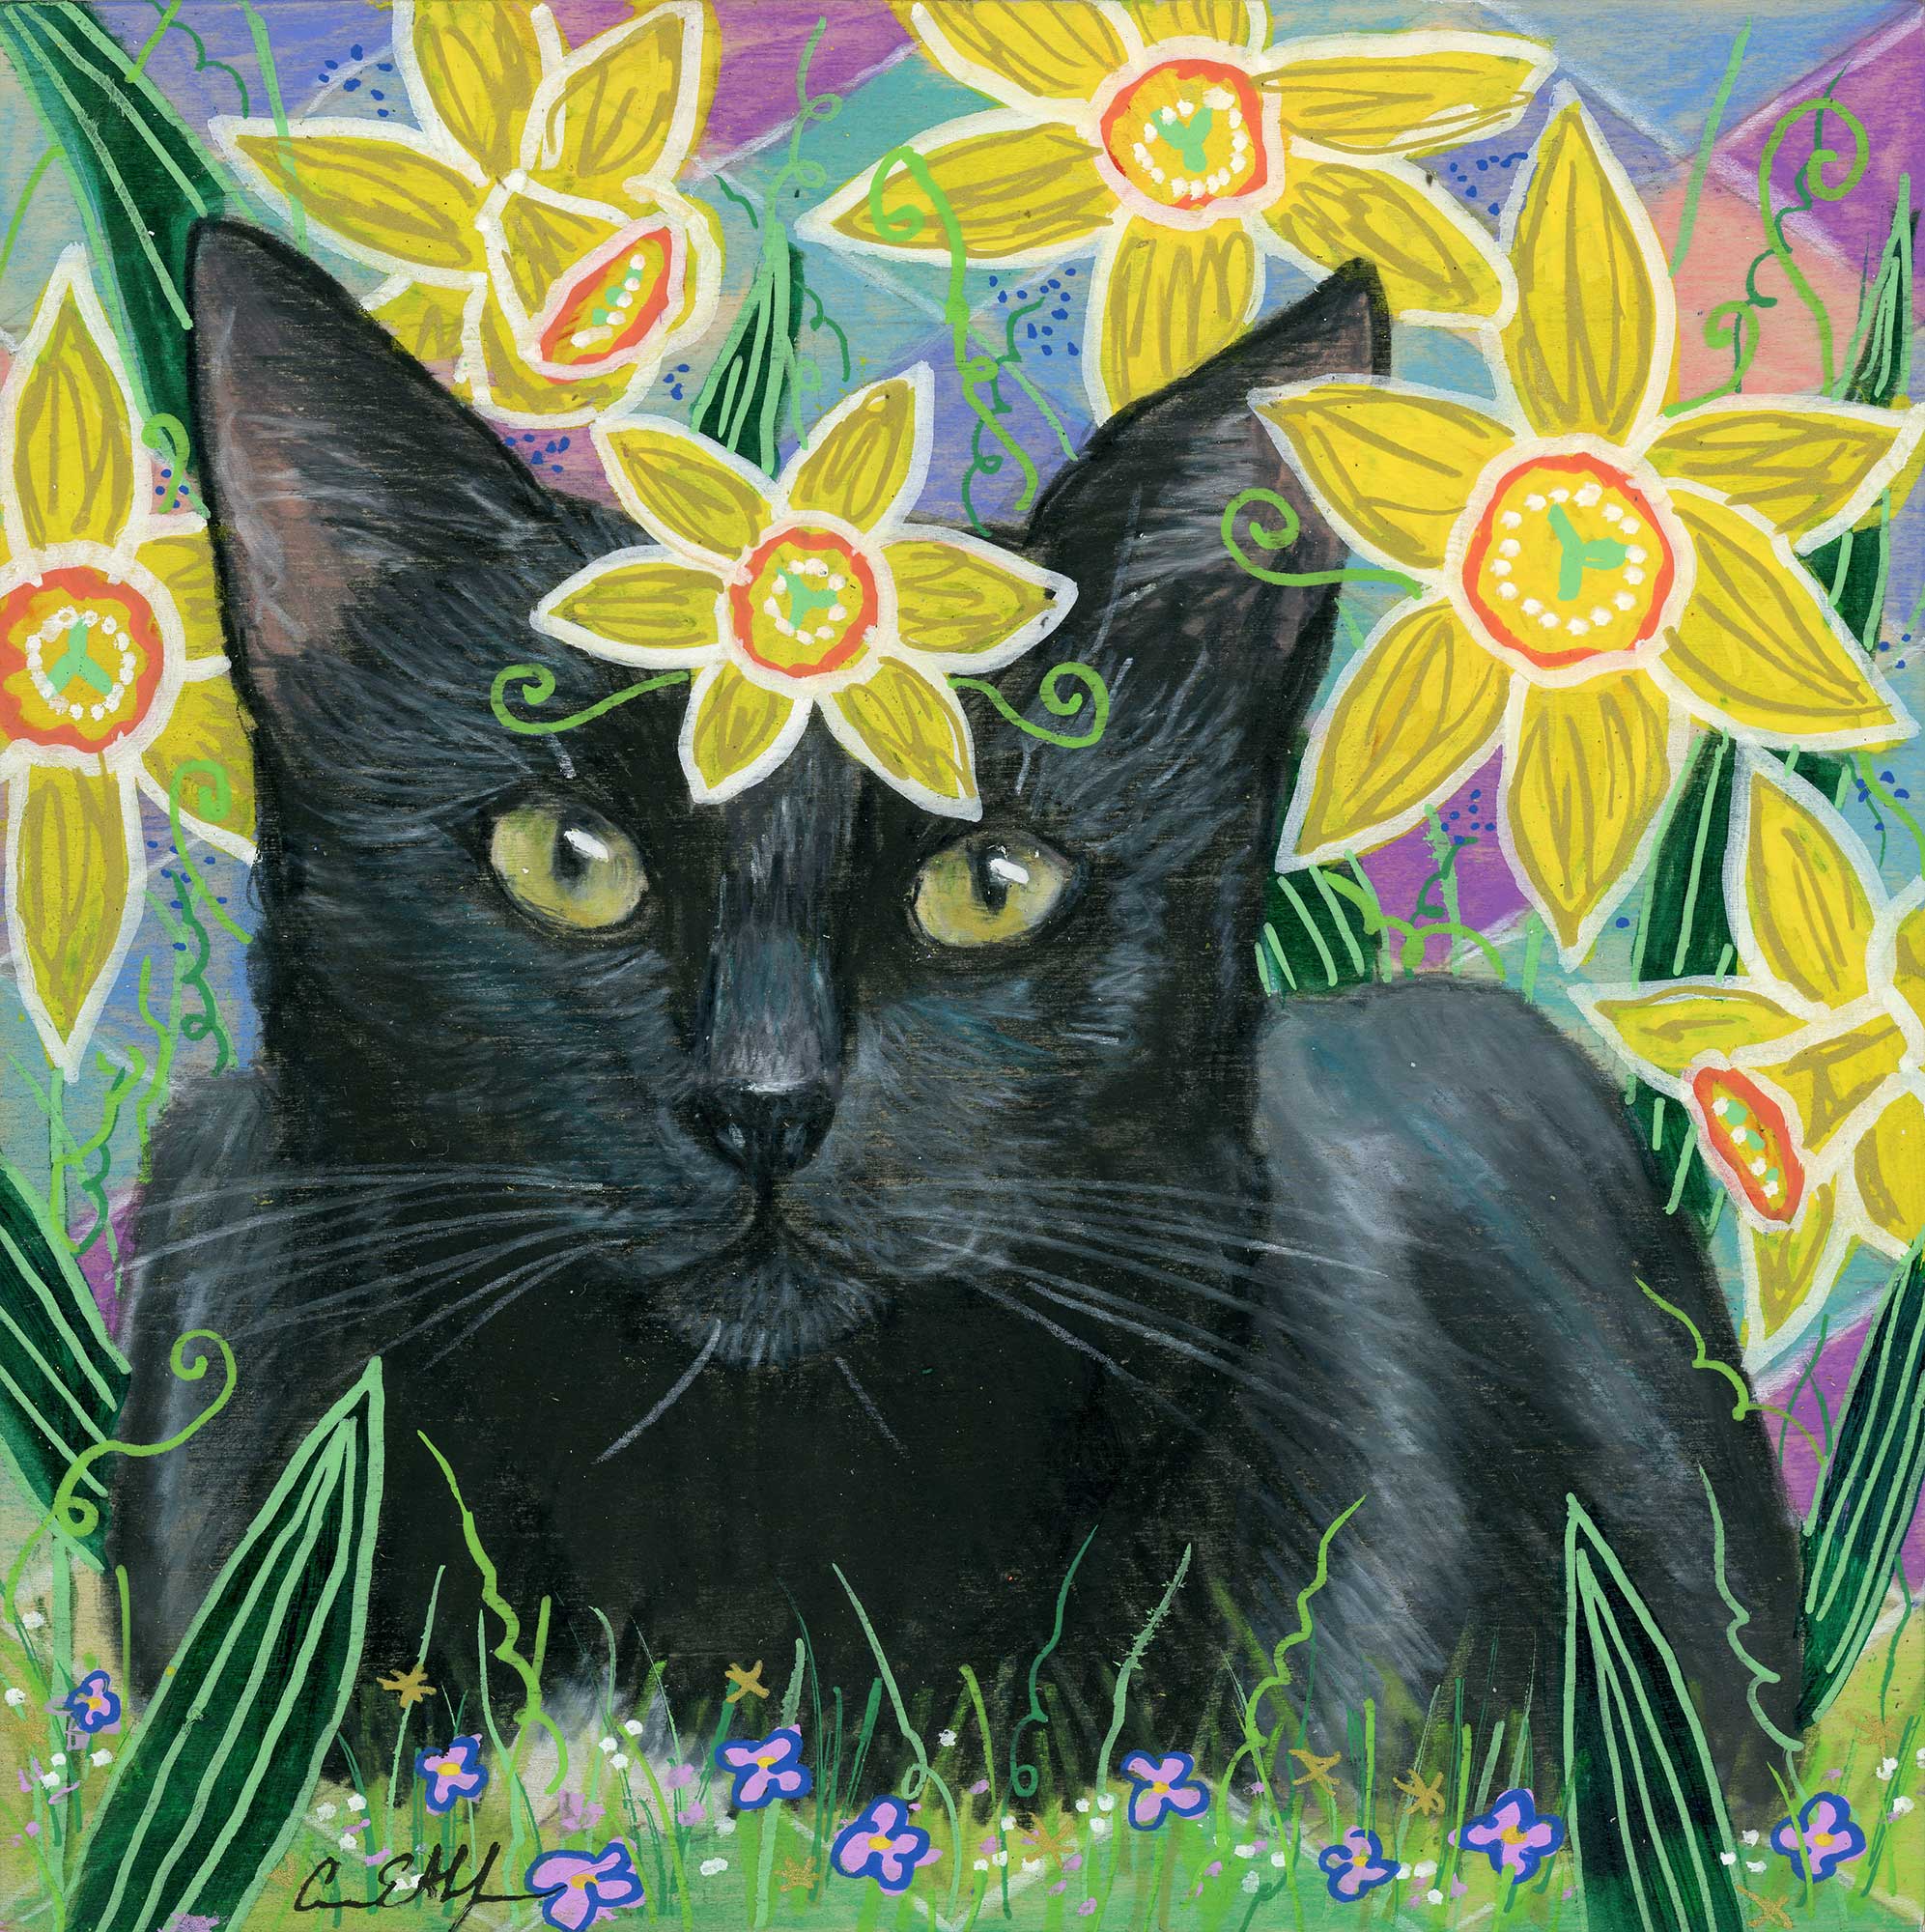 SOLD - "Black Cat in Daffodils", 6" x 6", mixed media